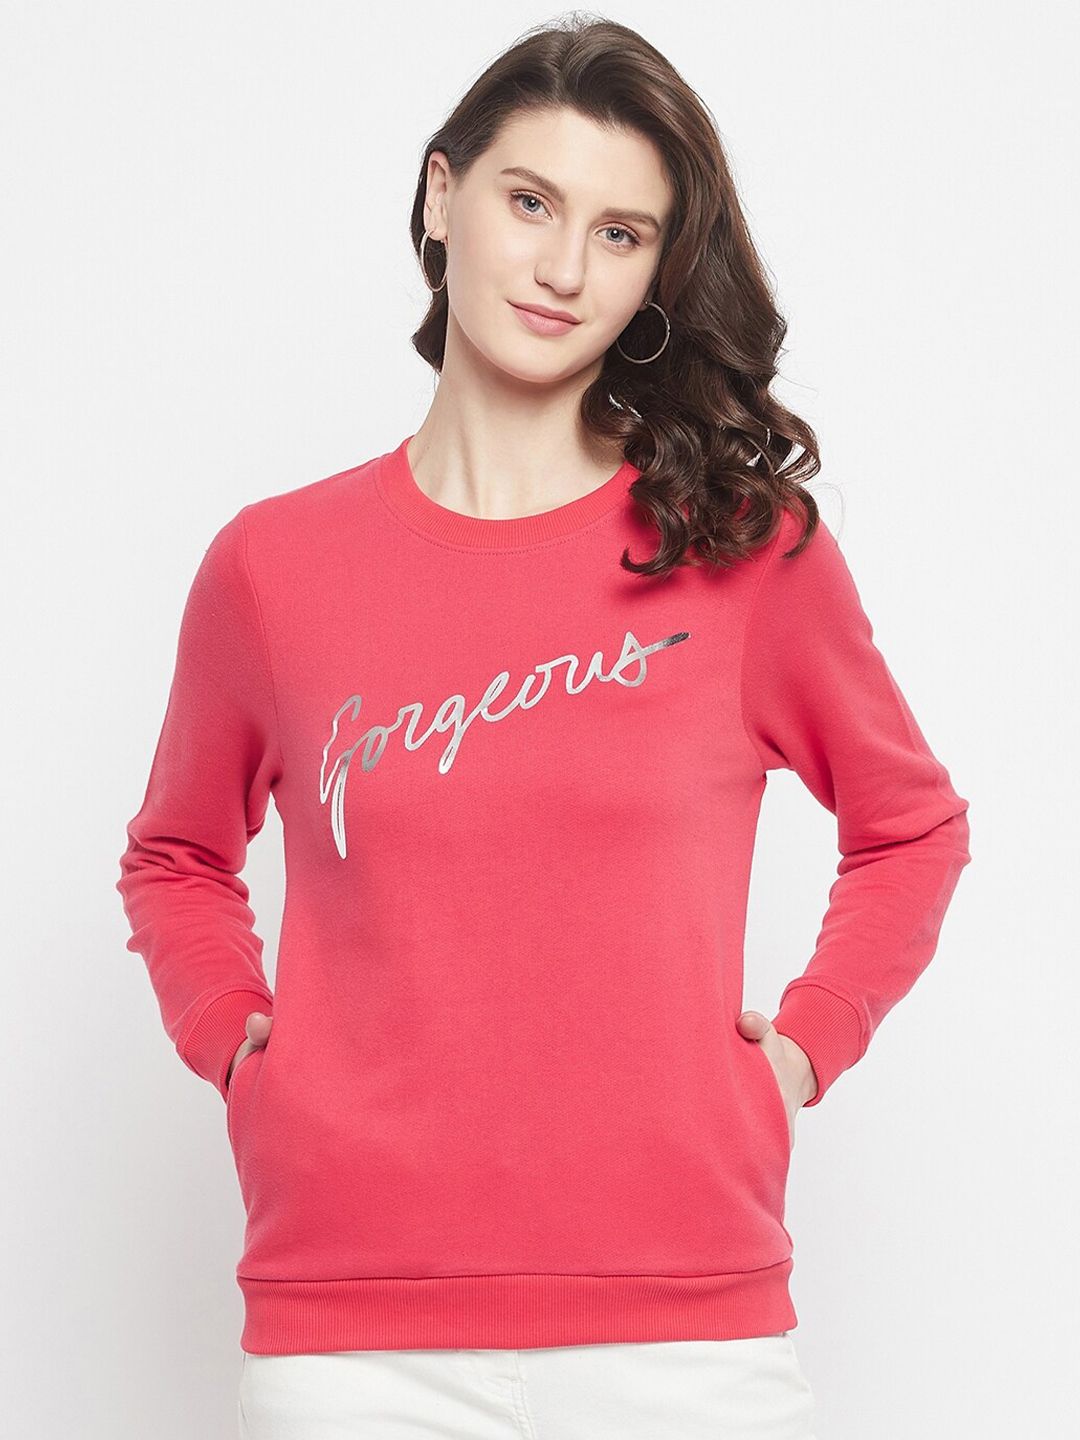 HARBORNBAY Women Coral Printed Sweatshirt Price in India